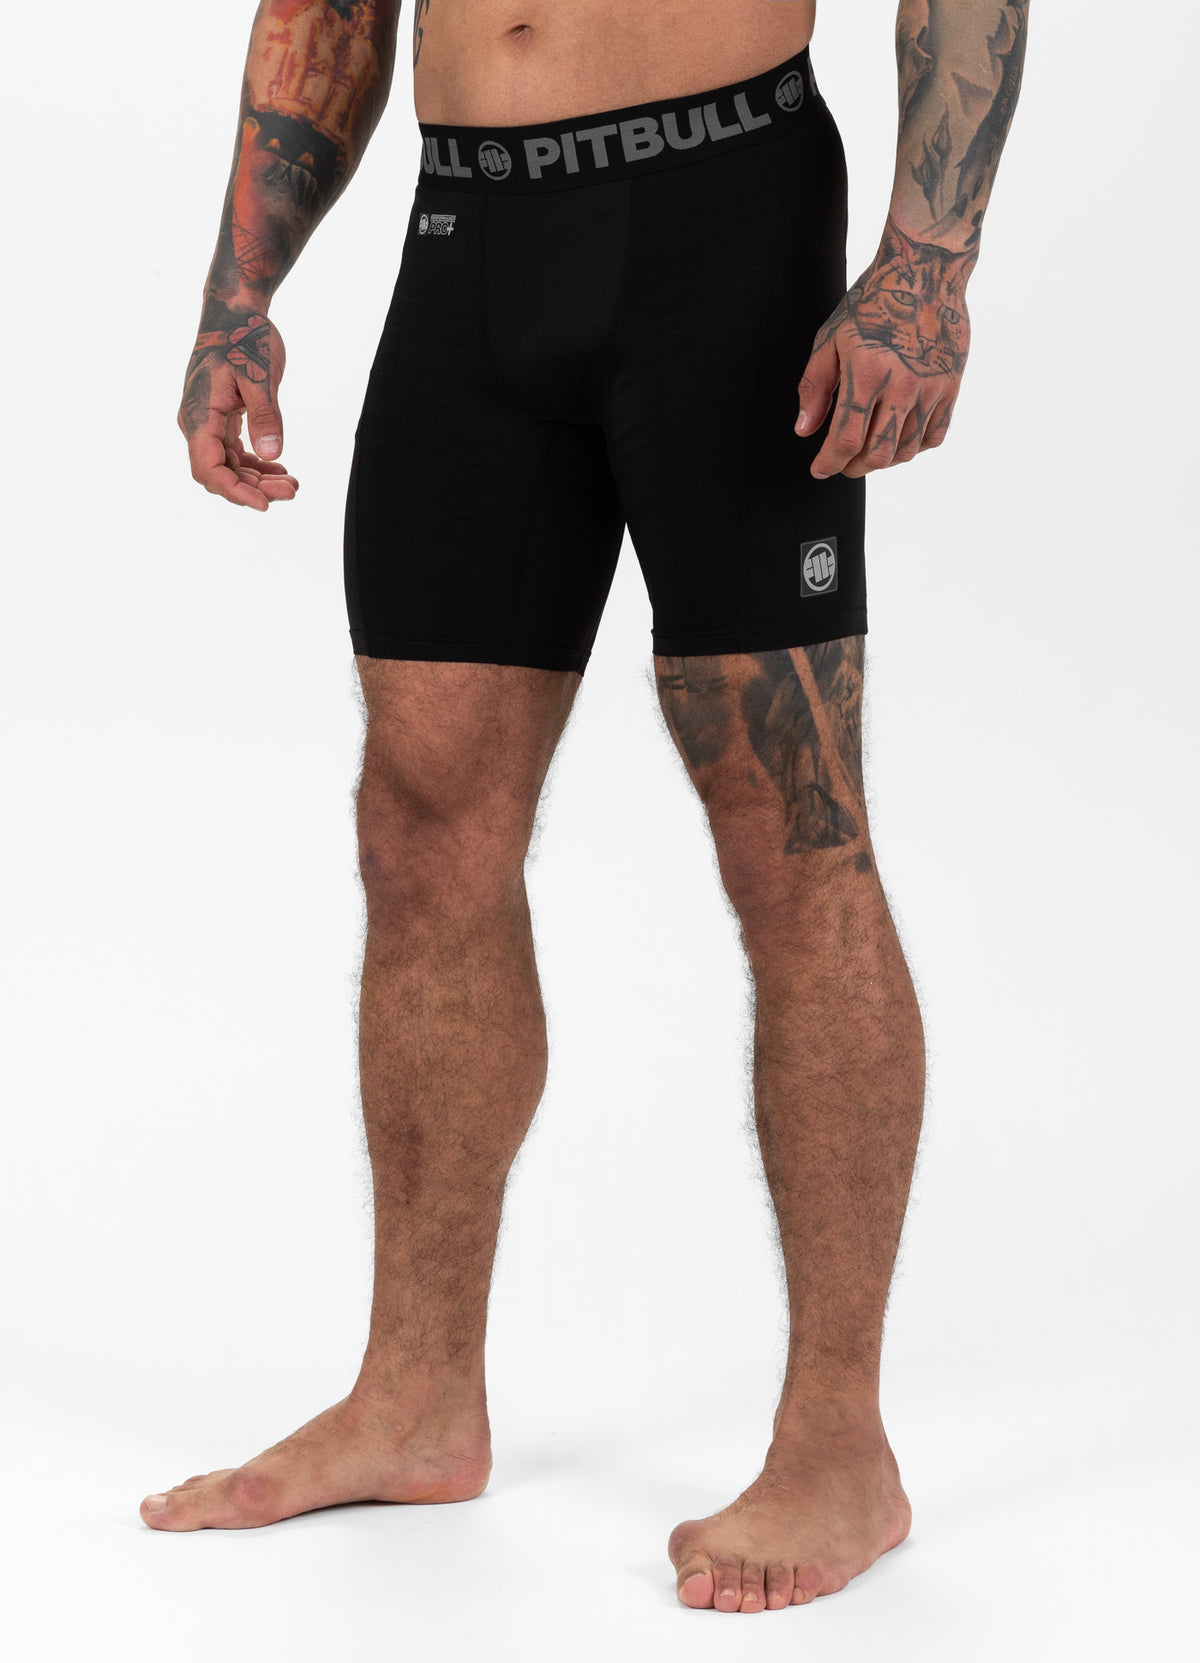 NEW LOGO Performance Black Compression Shorts - Pitbullstore.eu